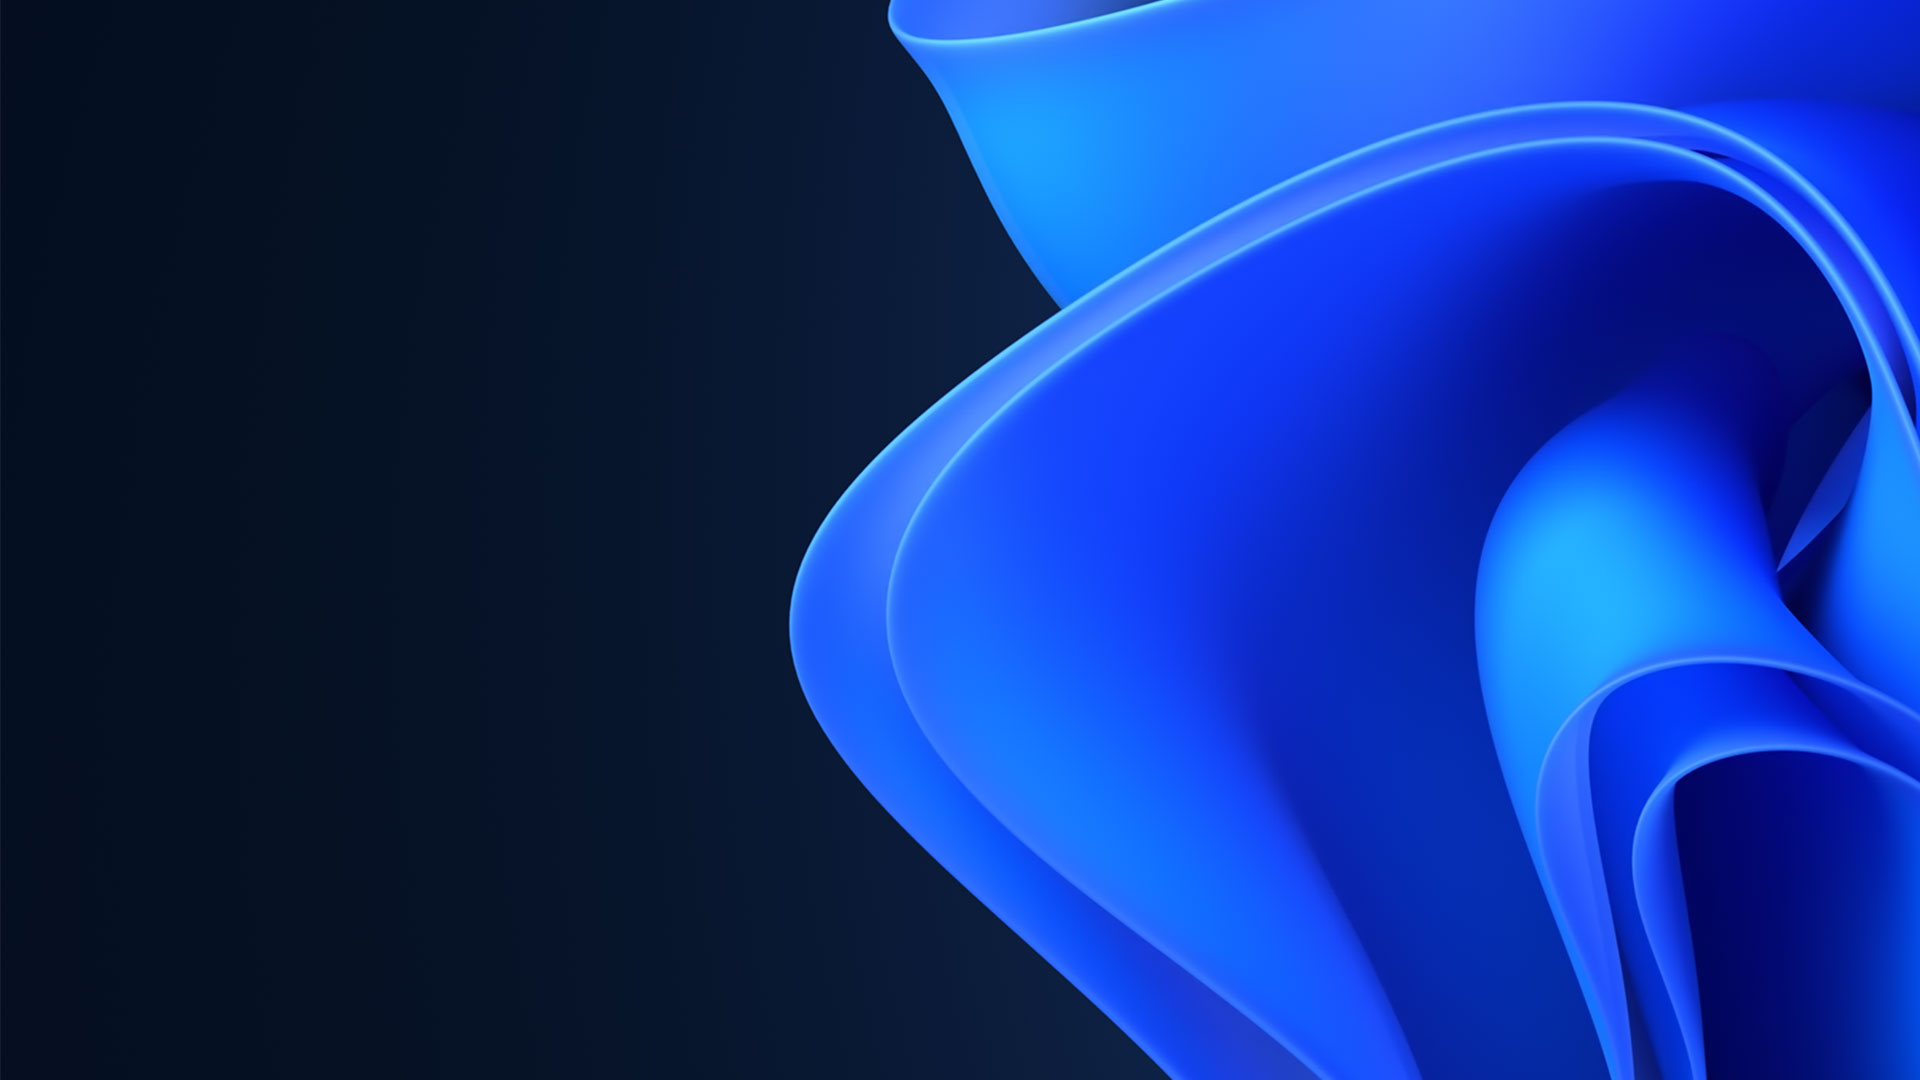  Logotipo da flor de fitas azuis do Windows 11